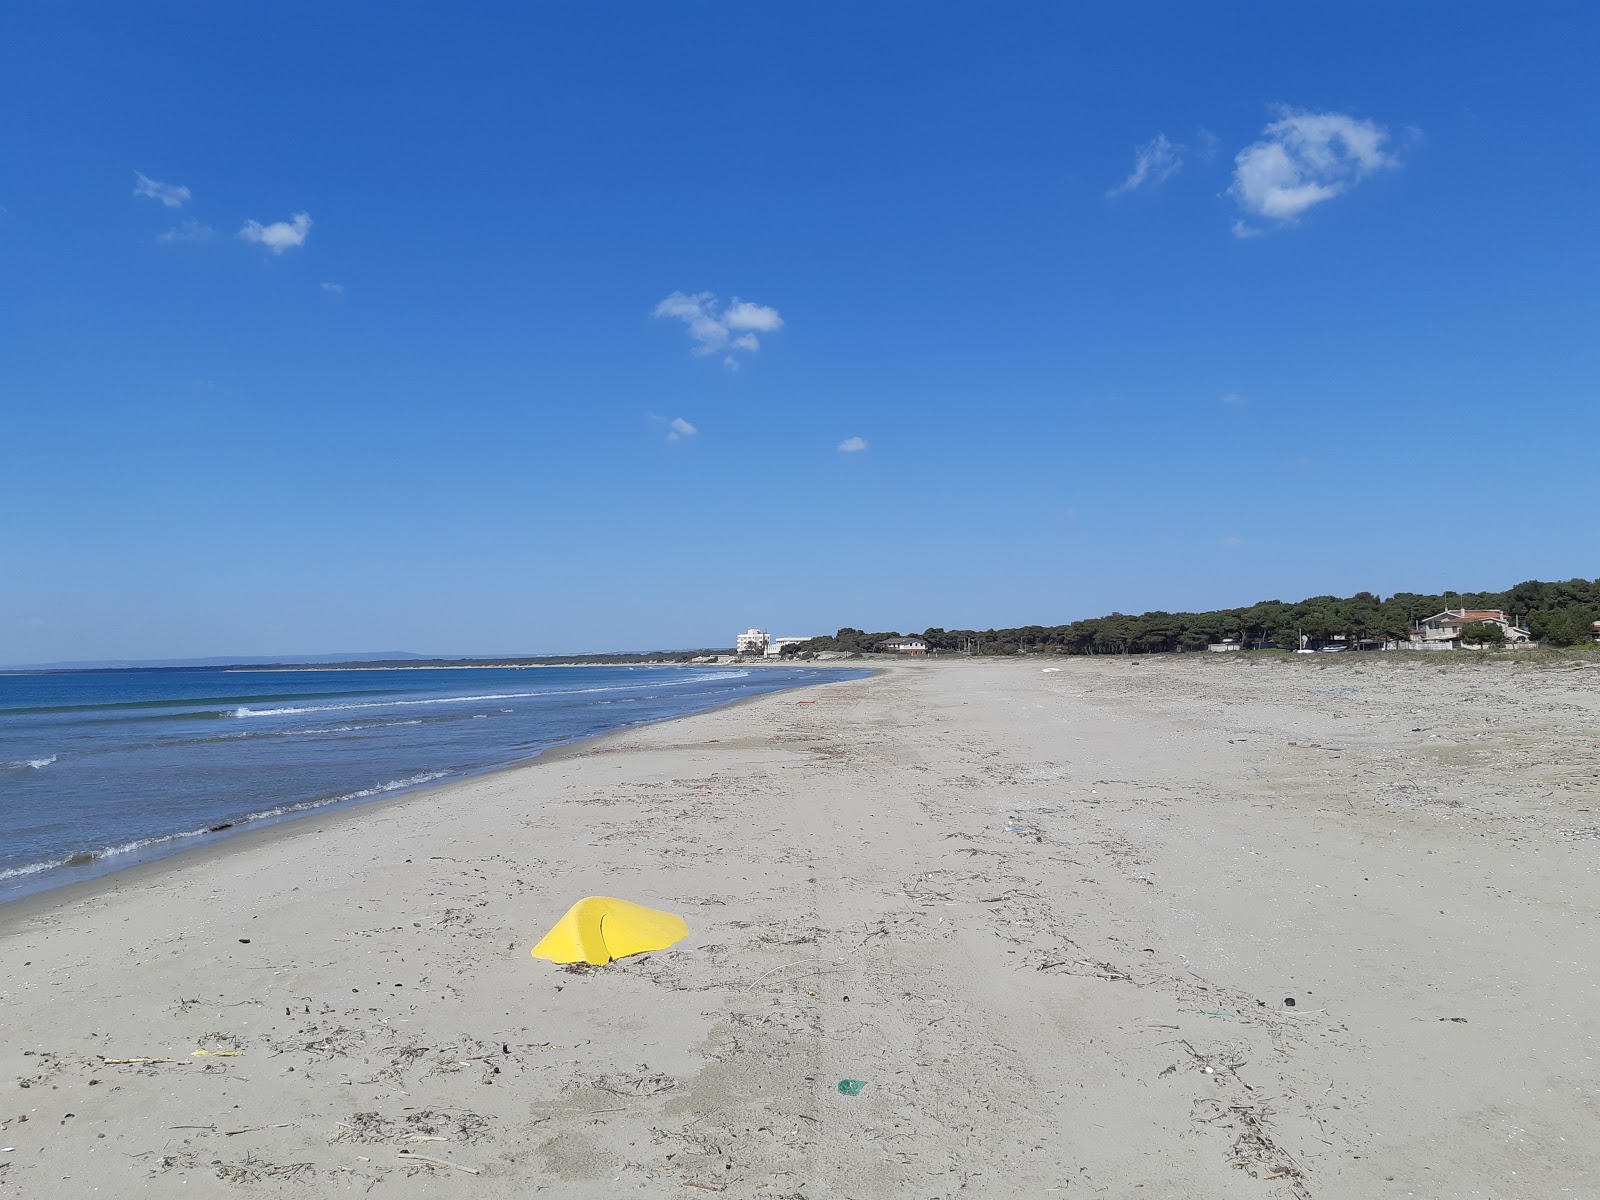 Foto di Lido Azzurro beach ubicato in zona naturale